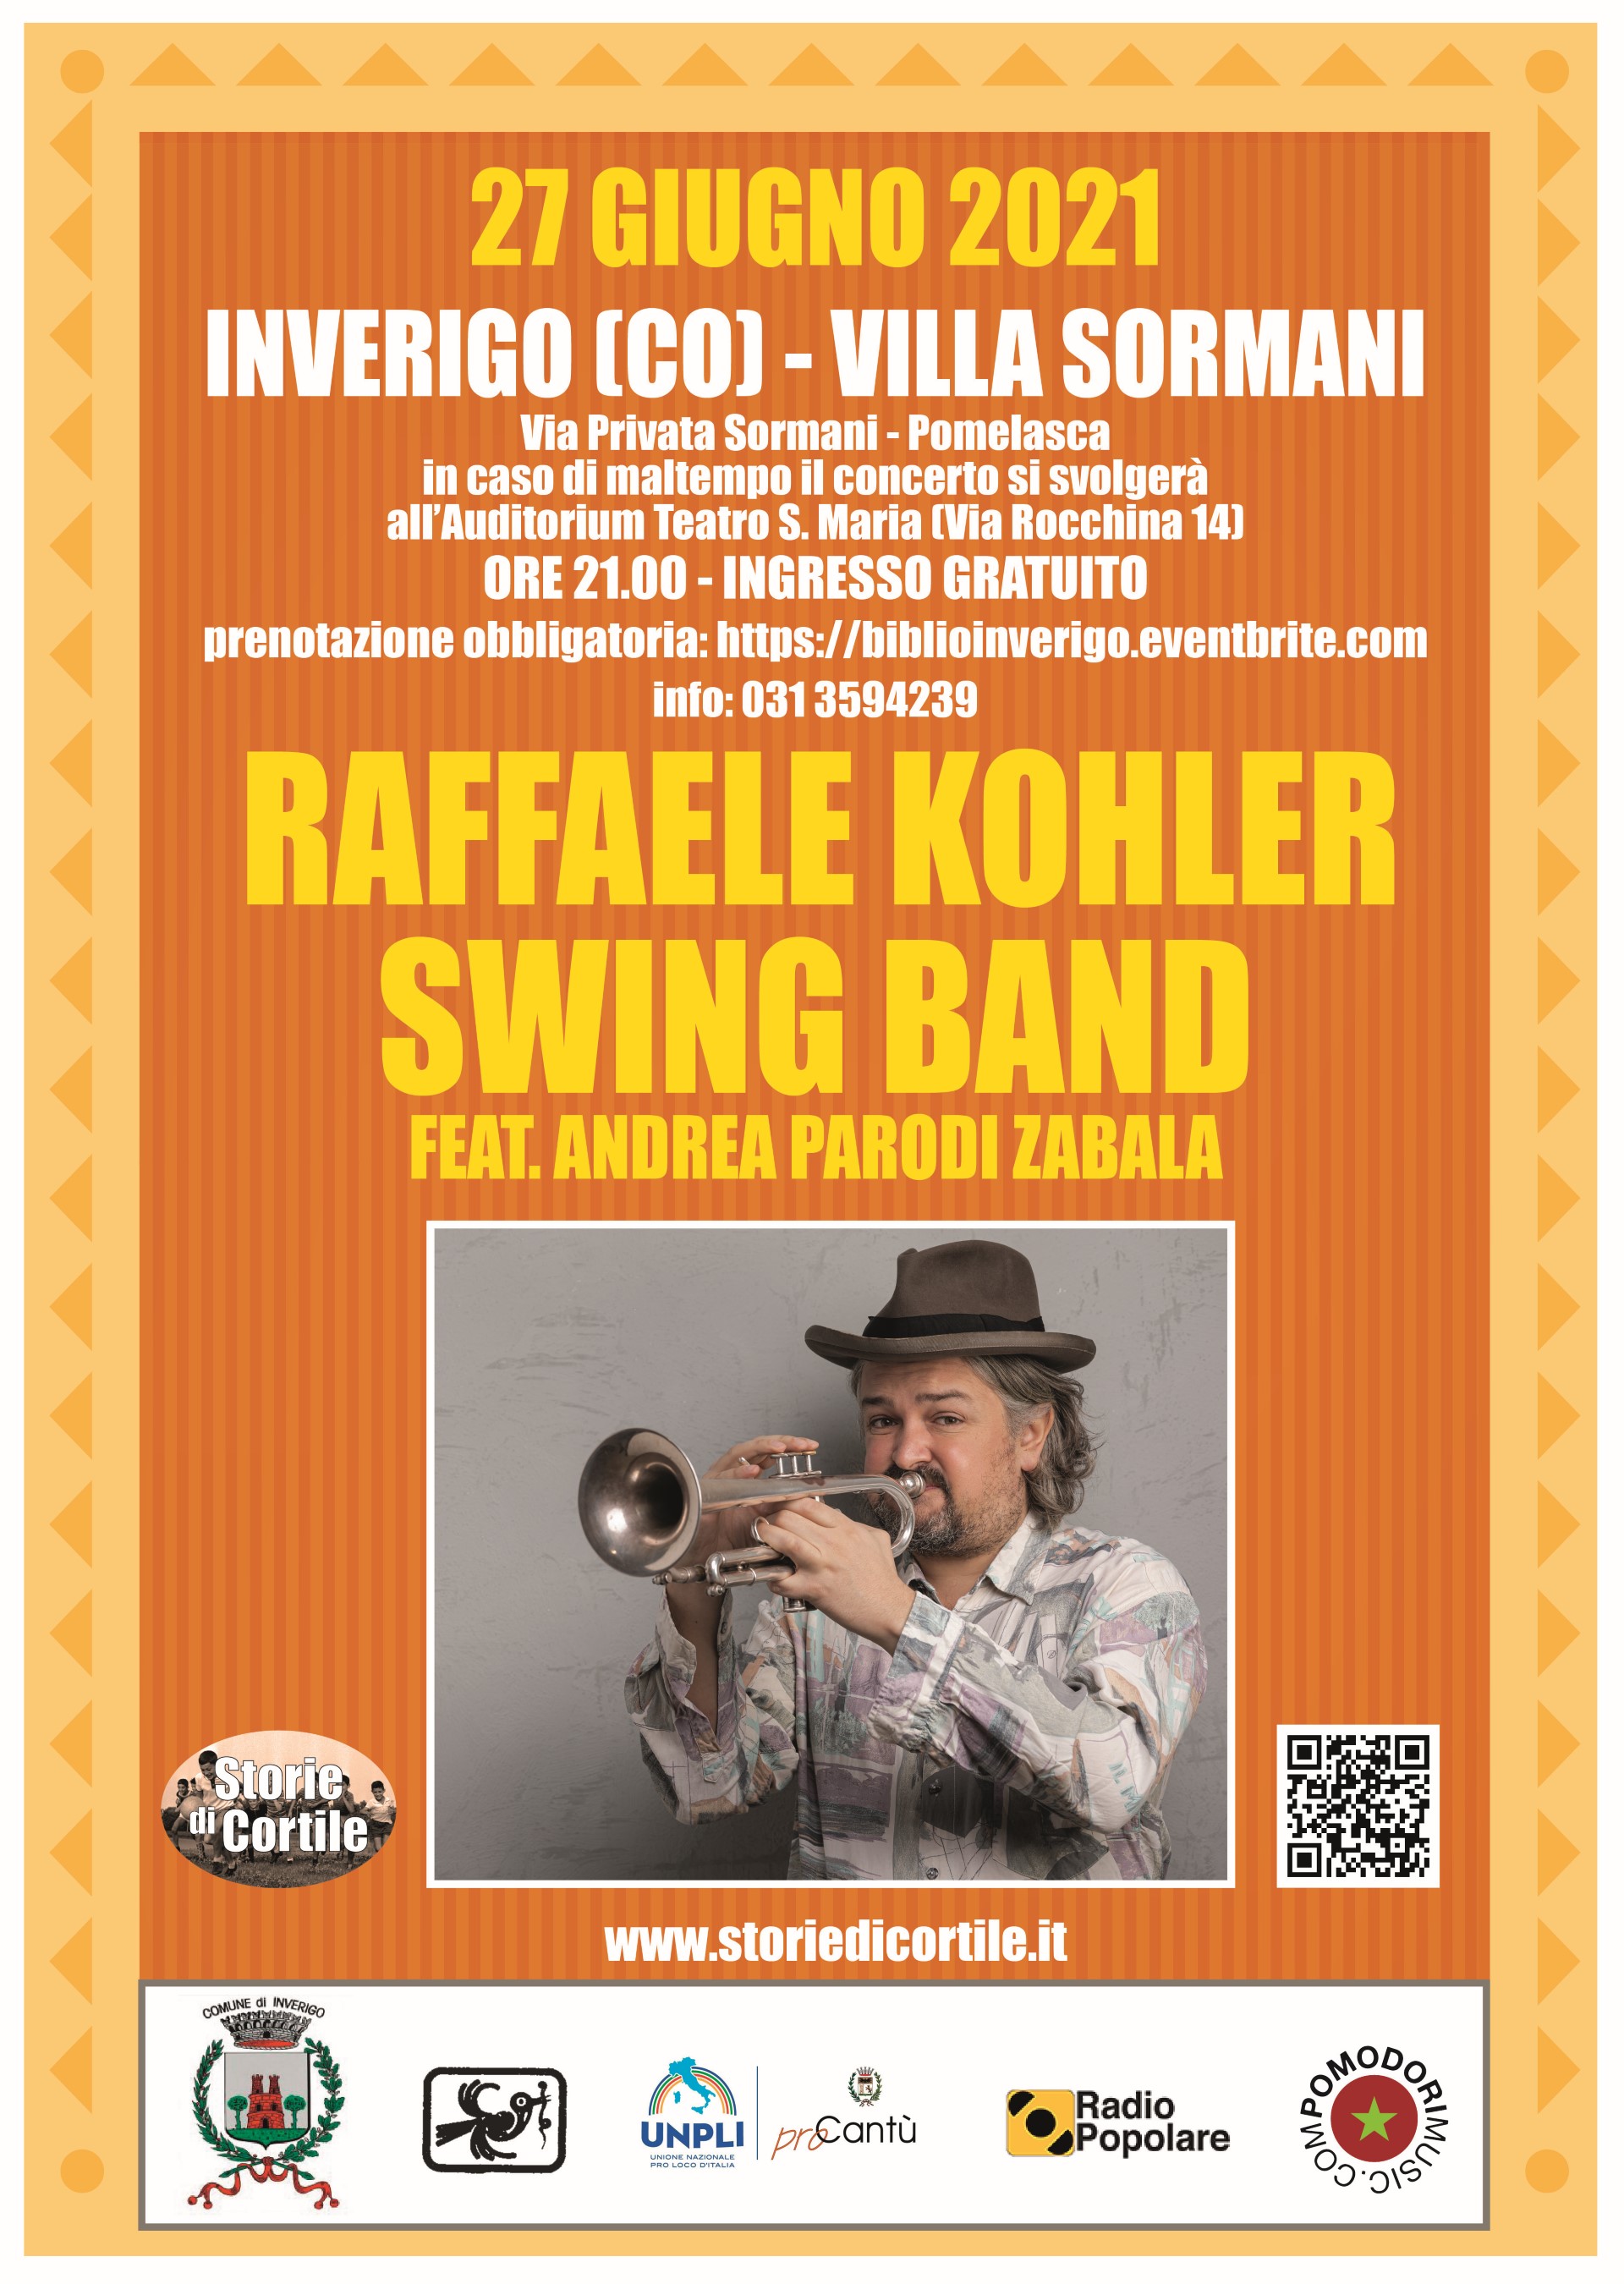 27 Giugno 2021 - Inverigo - Raffaele Kohler Swing Band feat. Andrea Parodi Zabala